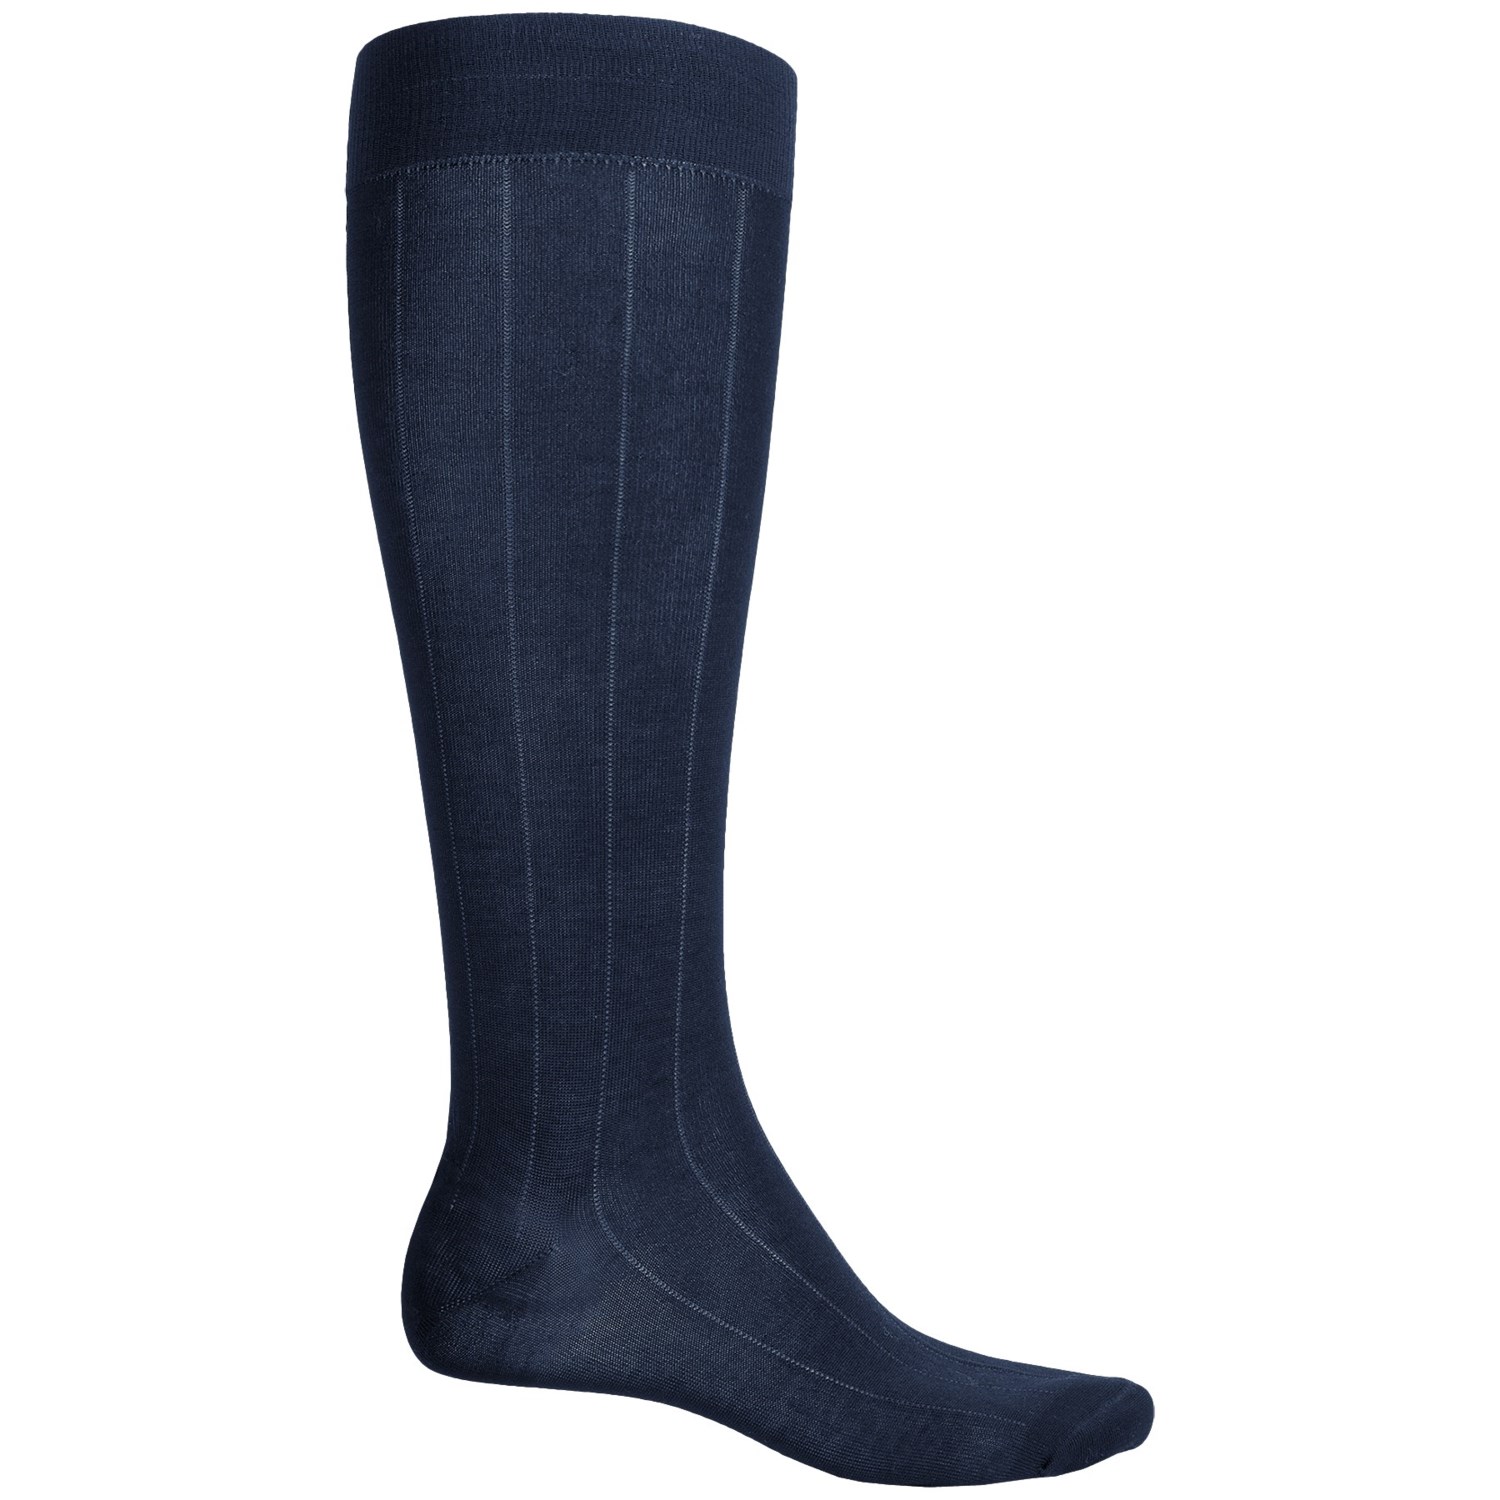 Pantherella Over-the-Calf Dress Socks (For Men) 11577 - Save 82%